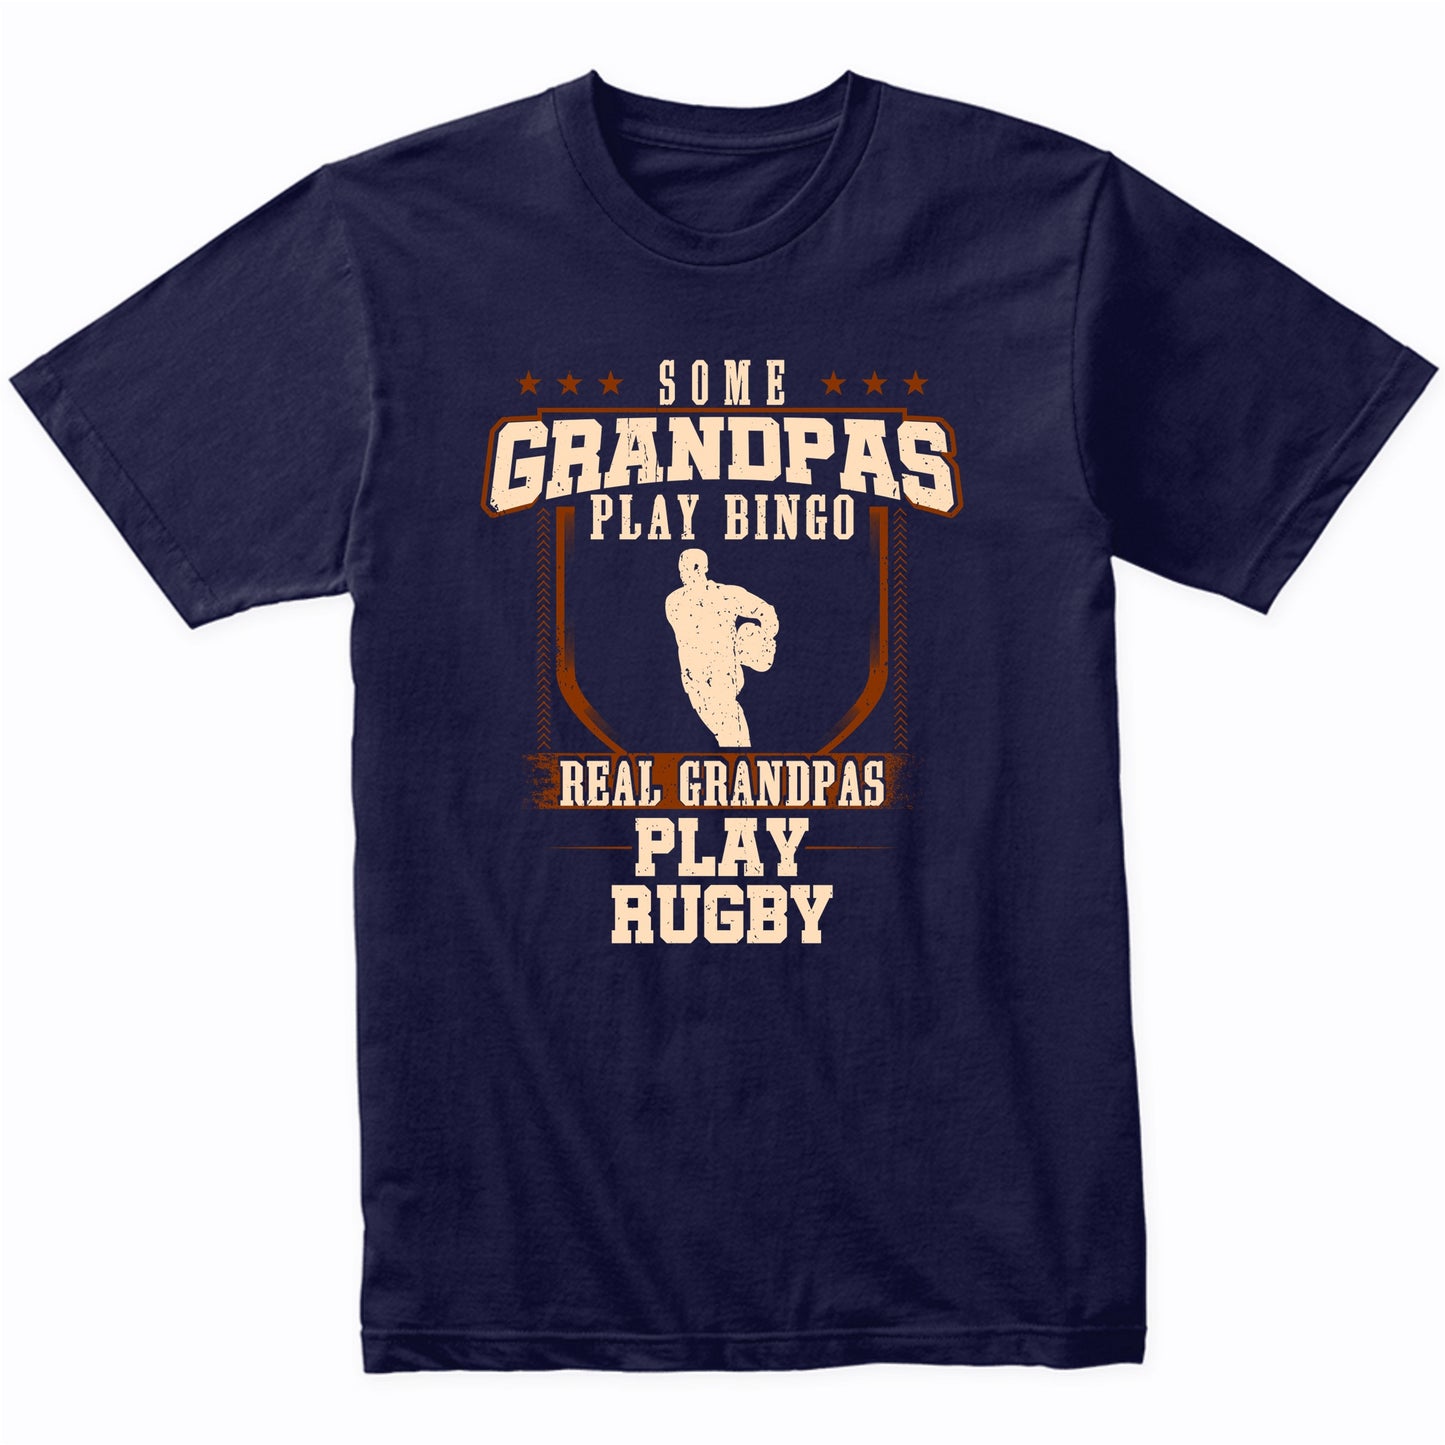 Some Grandpas Play Bingo Real Grandpas Play Rugby Shirt